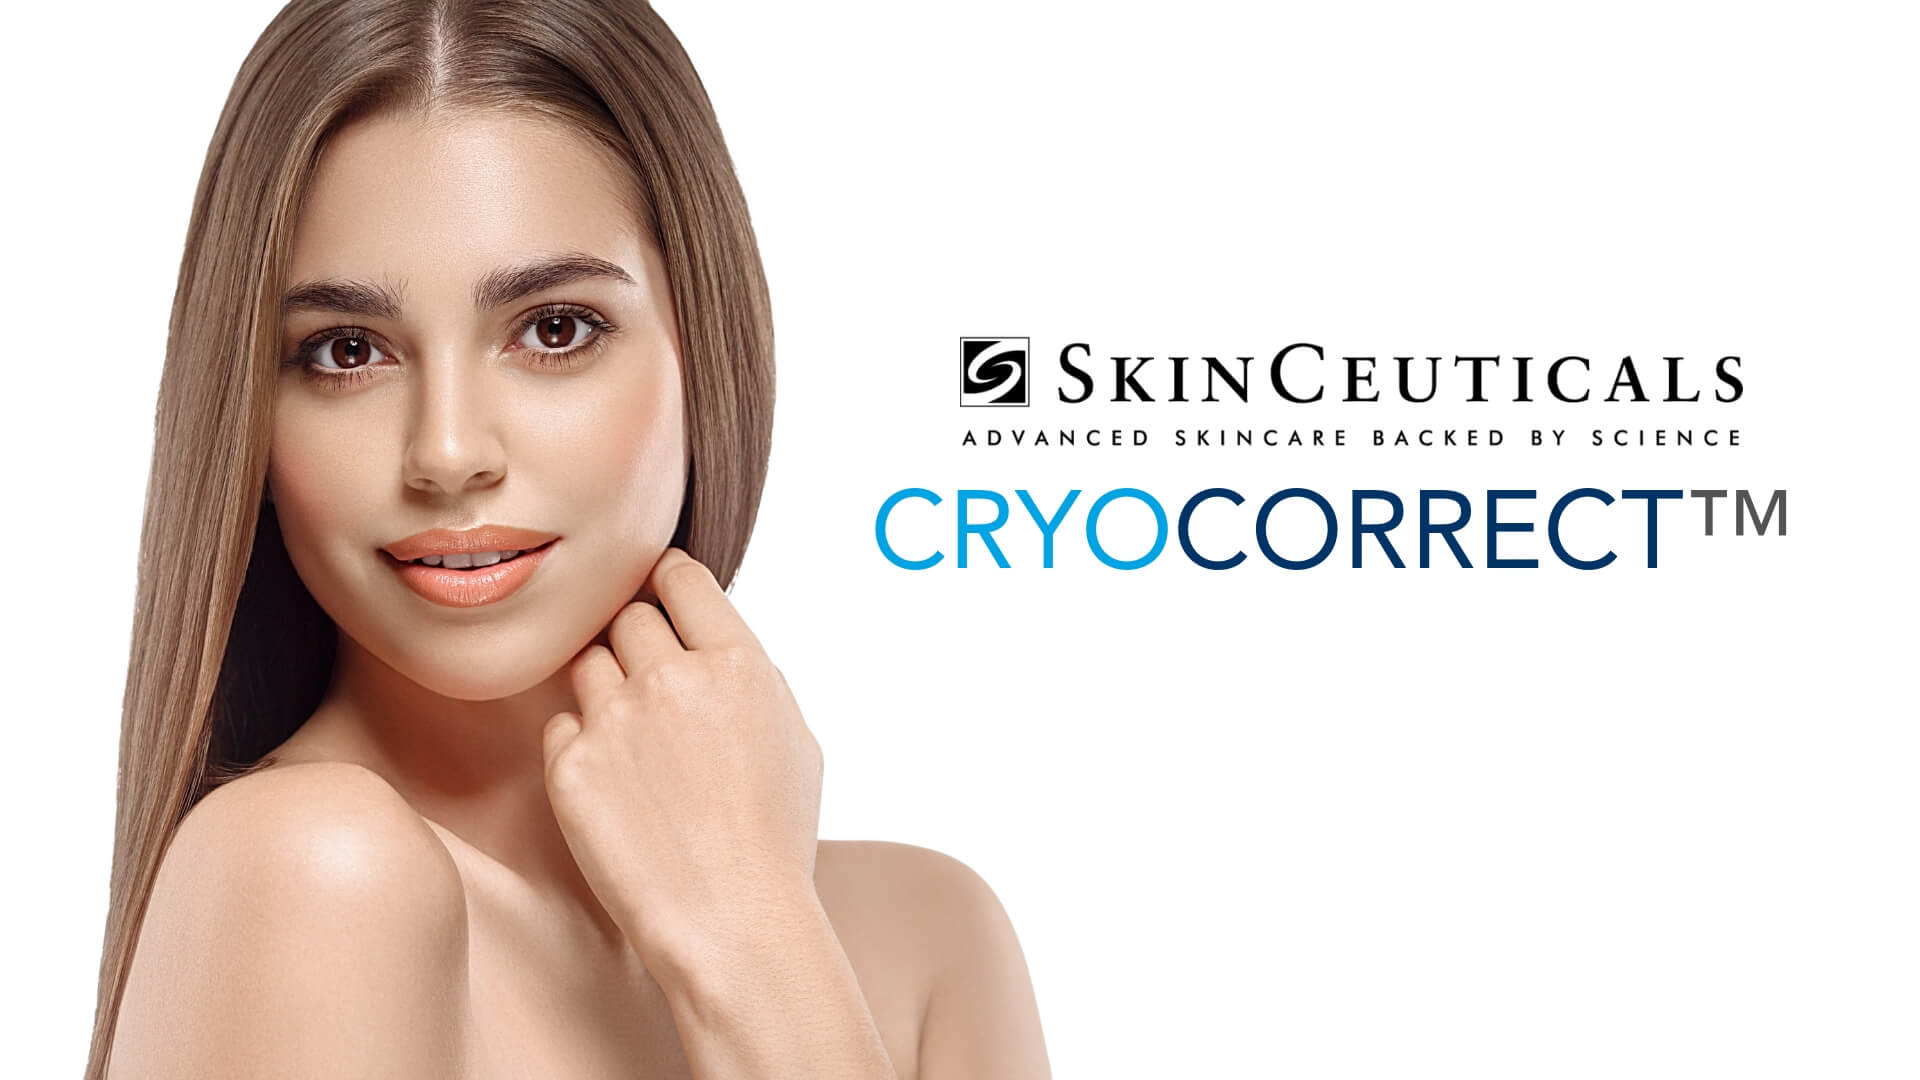 vein-and-cosmetics-cryocorrect